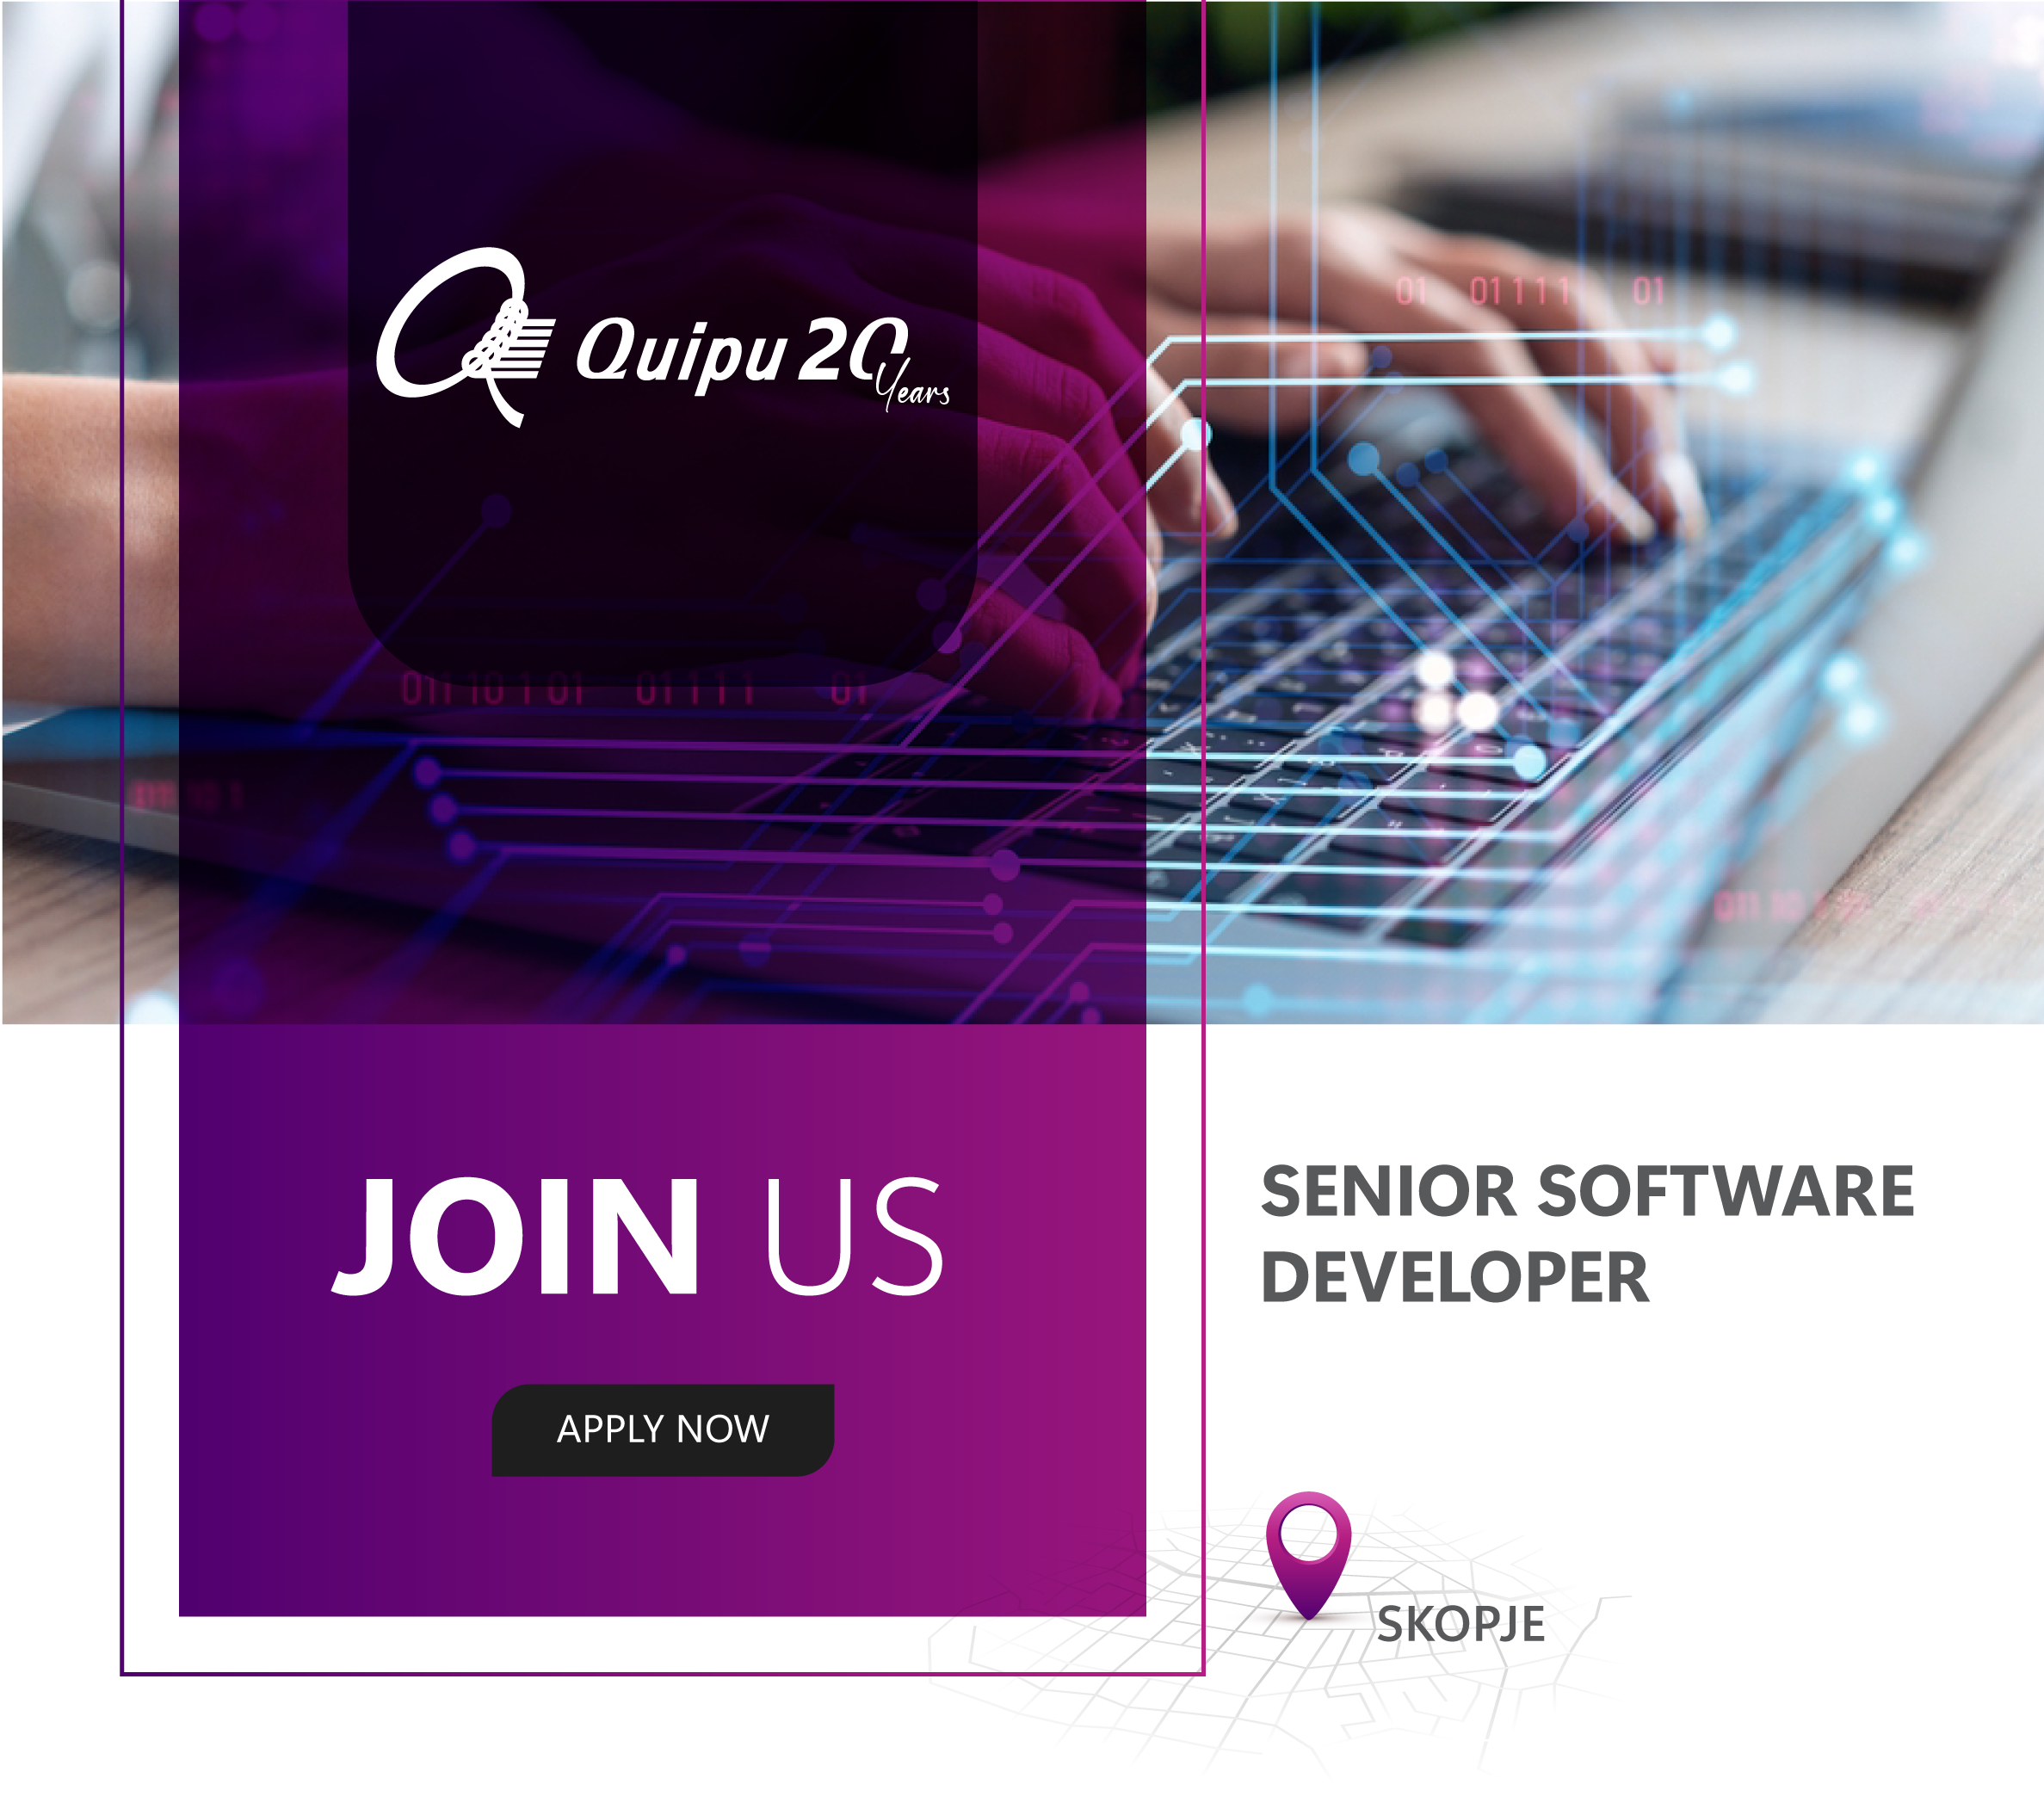 Senior Software Developer – Skopje